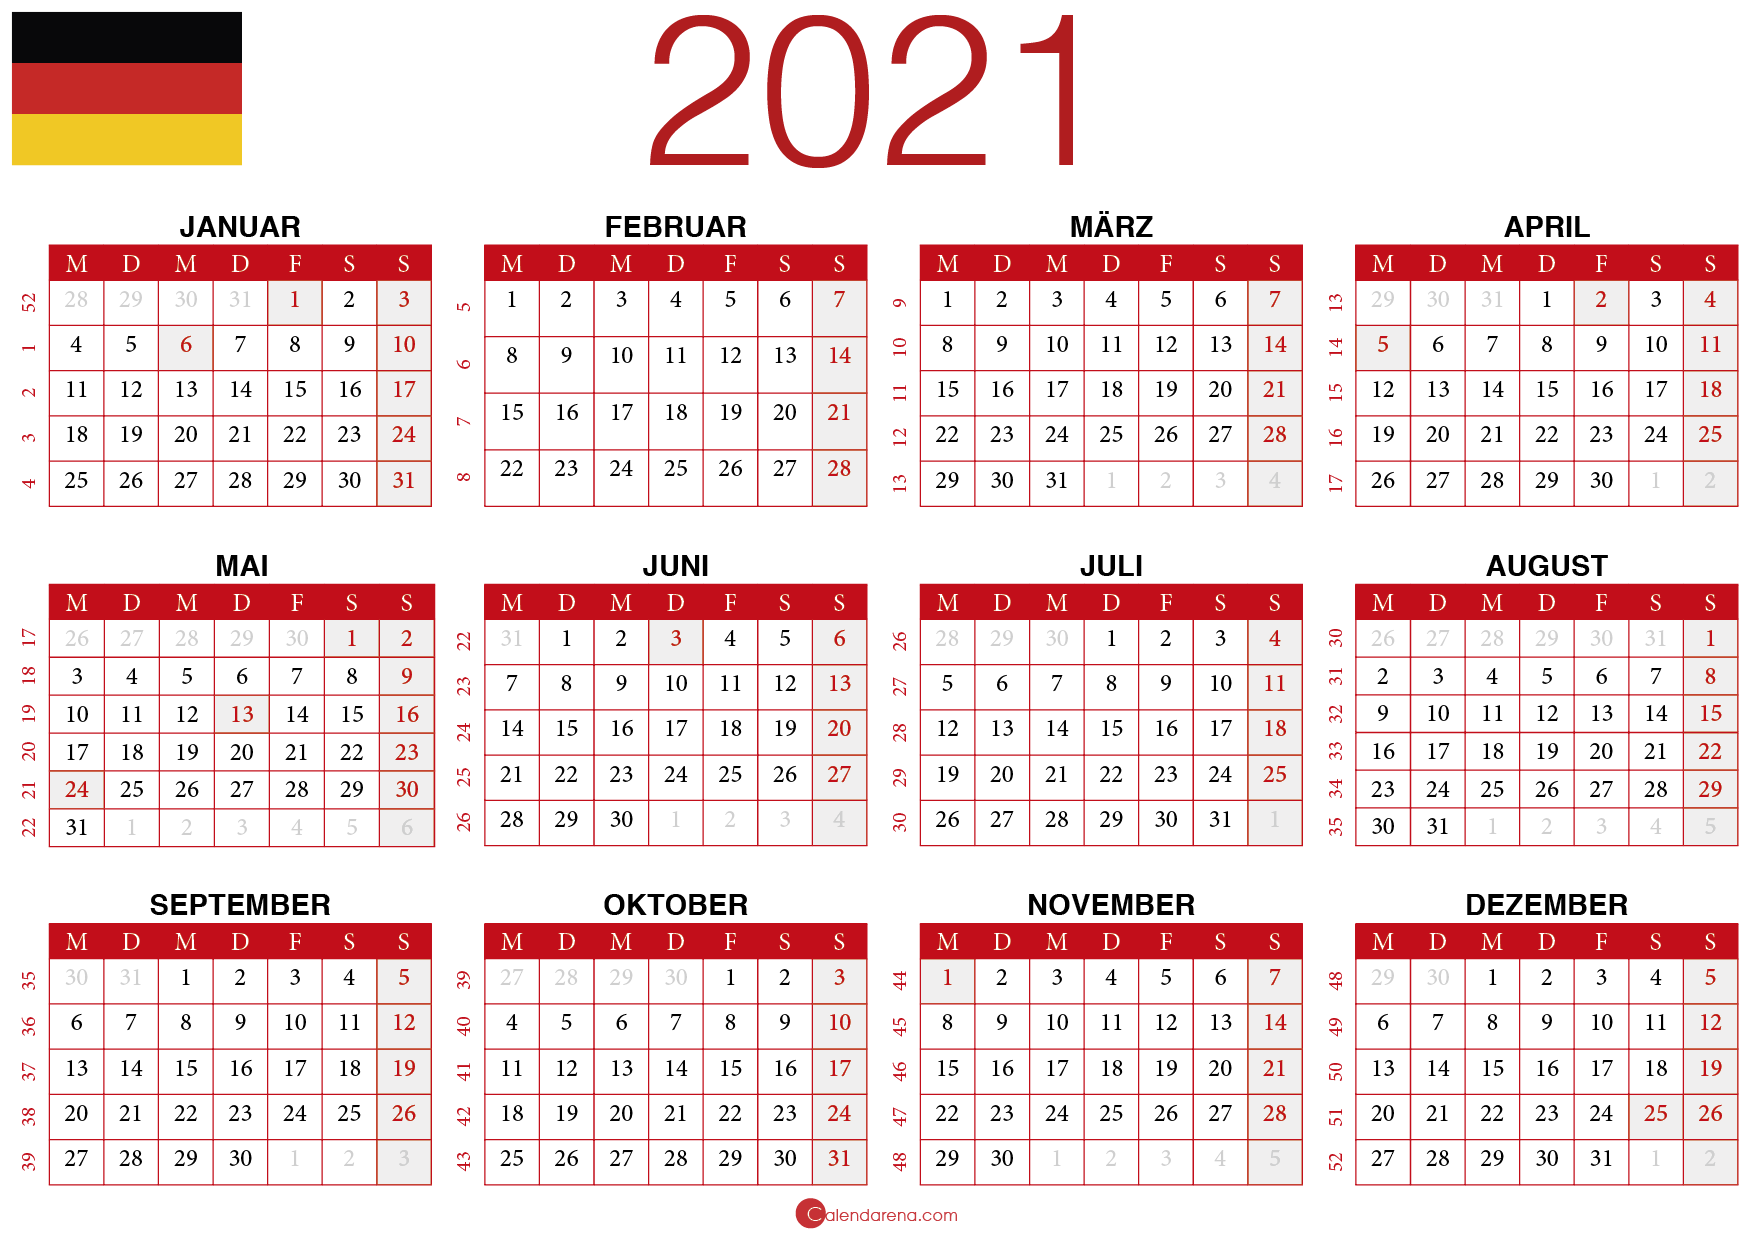 2021 Kalender - Calendarena